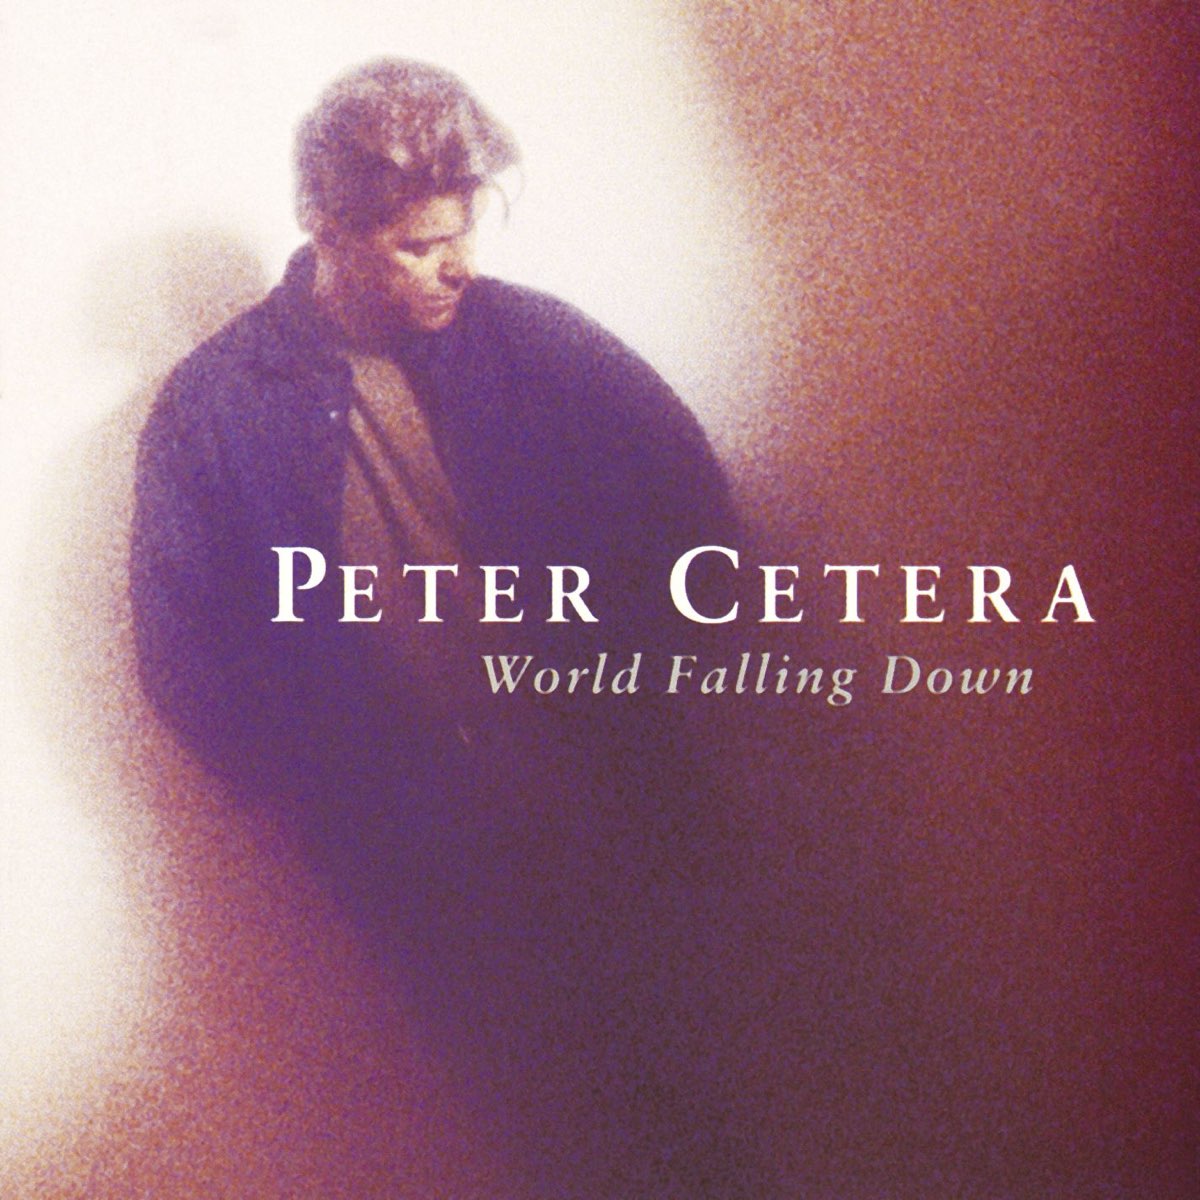 The world is falling. Solitude/Solitaire Питер сетера. Peter Cetera Solitude / Solitaire. Peter Cetera CD. Peter Cetera Live in Symphonic.